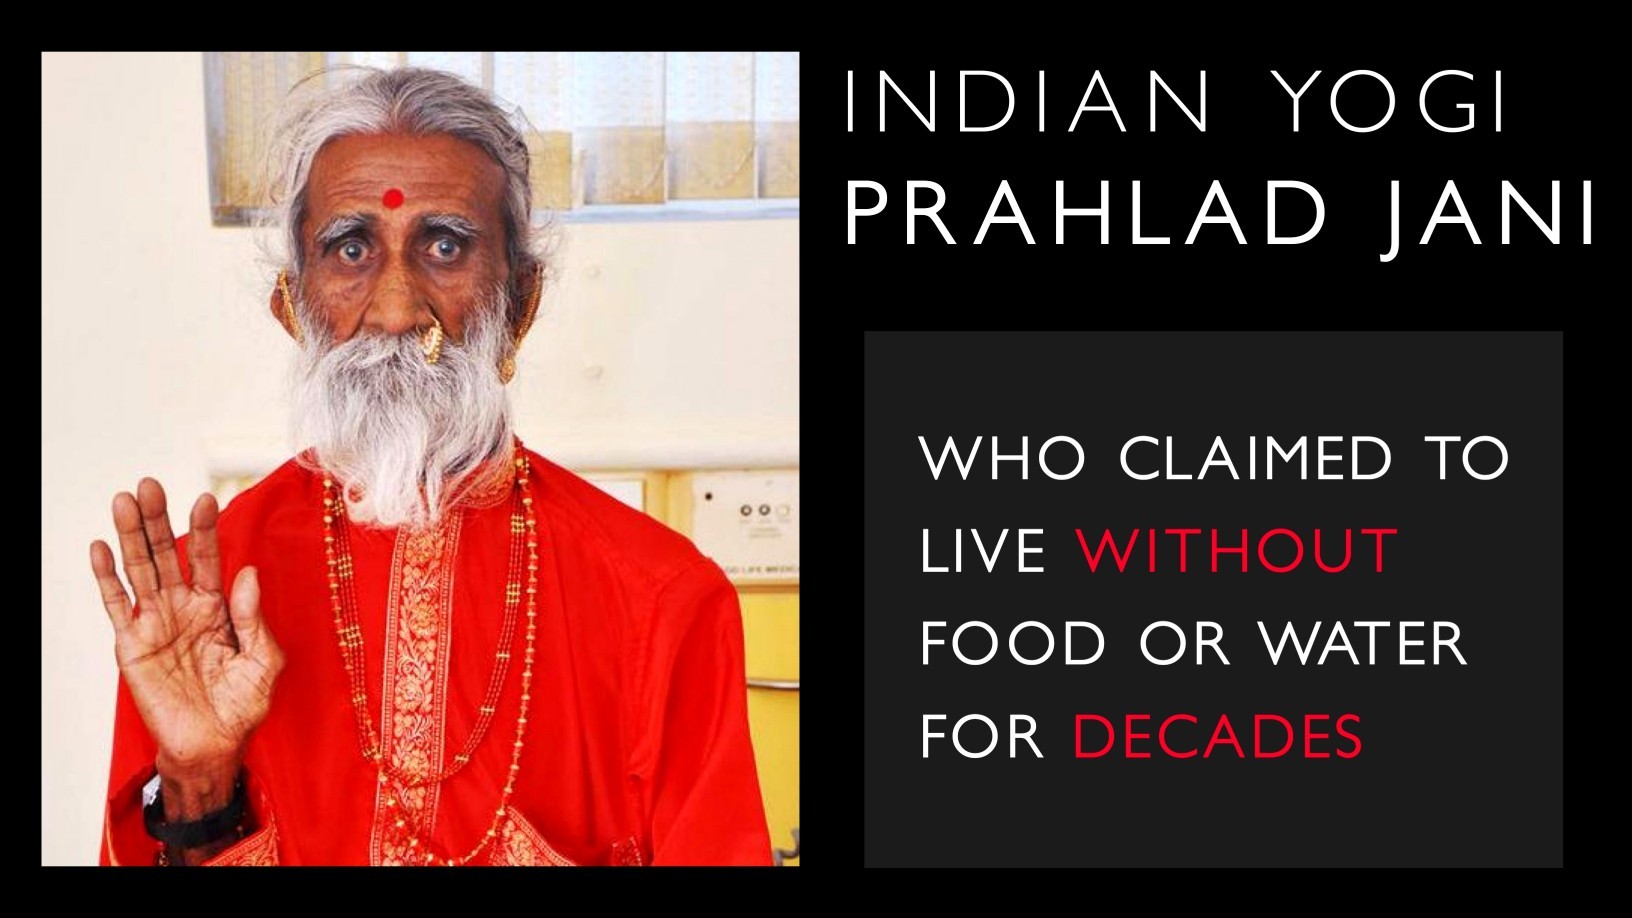 Prahlad Jani – 수십 년 동안 음식이나 물 없이 살았다고 주장한 인도 요기 1